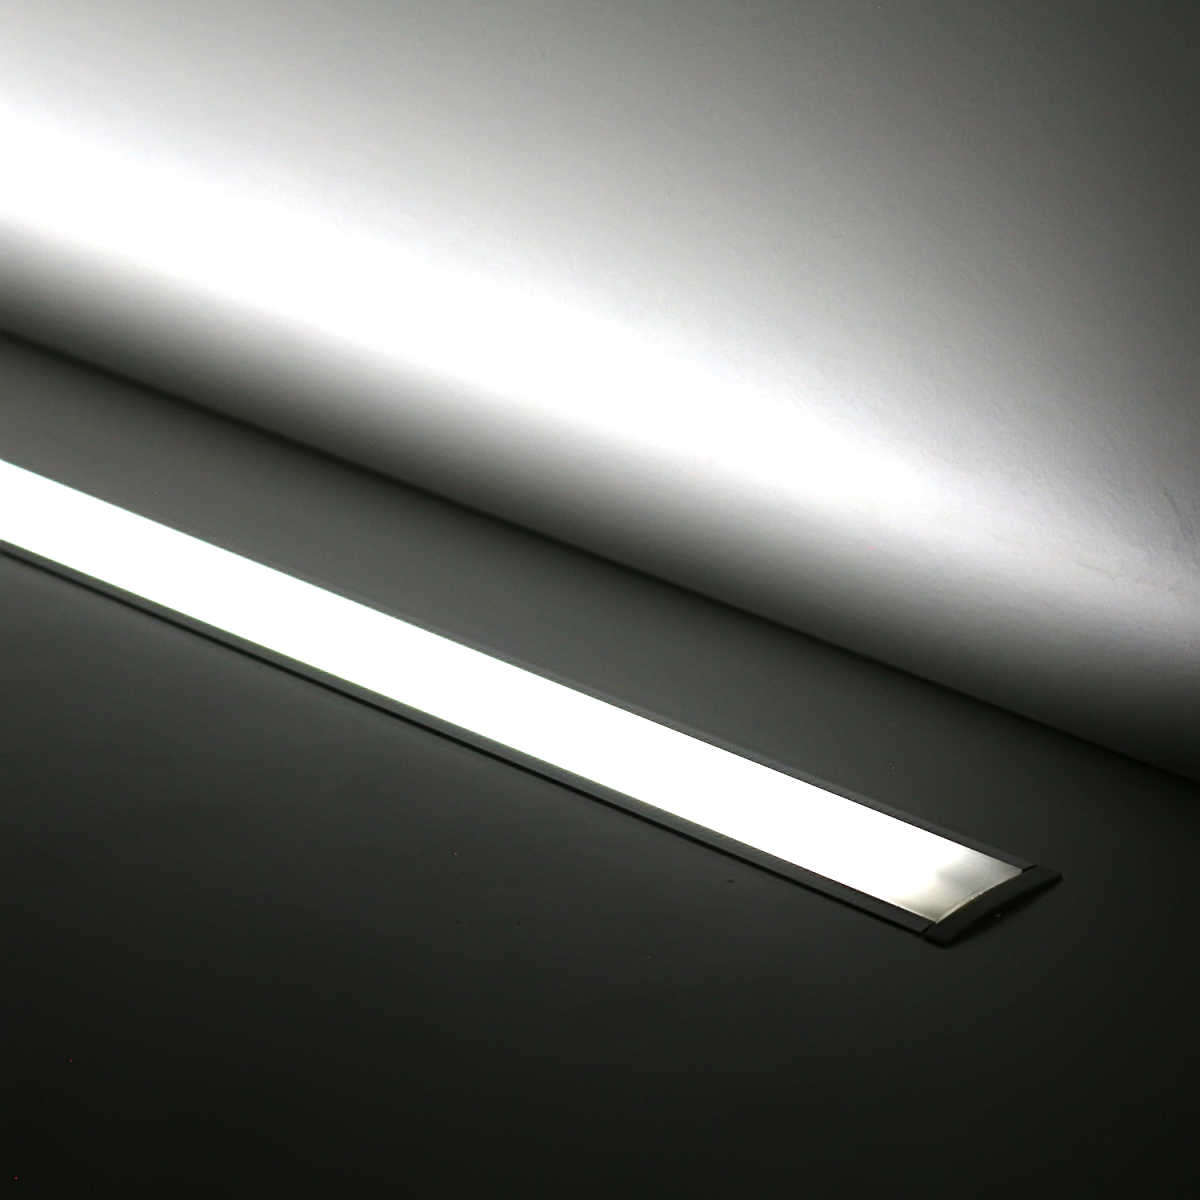 Einbau LED Lichtleiste "Inside max" diffus | mit 24V High-Performance LED-Streifen 240x 2835 LEDs 20W/m 3164 lm/m | tageslichtweiß 6200K |